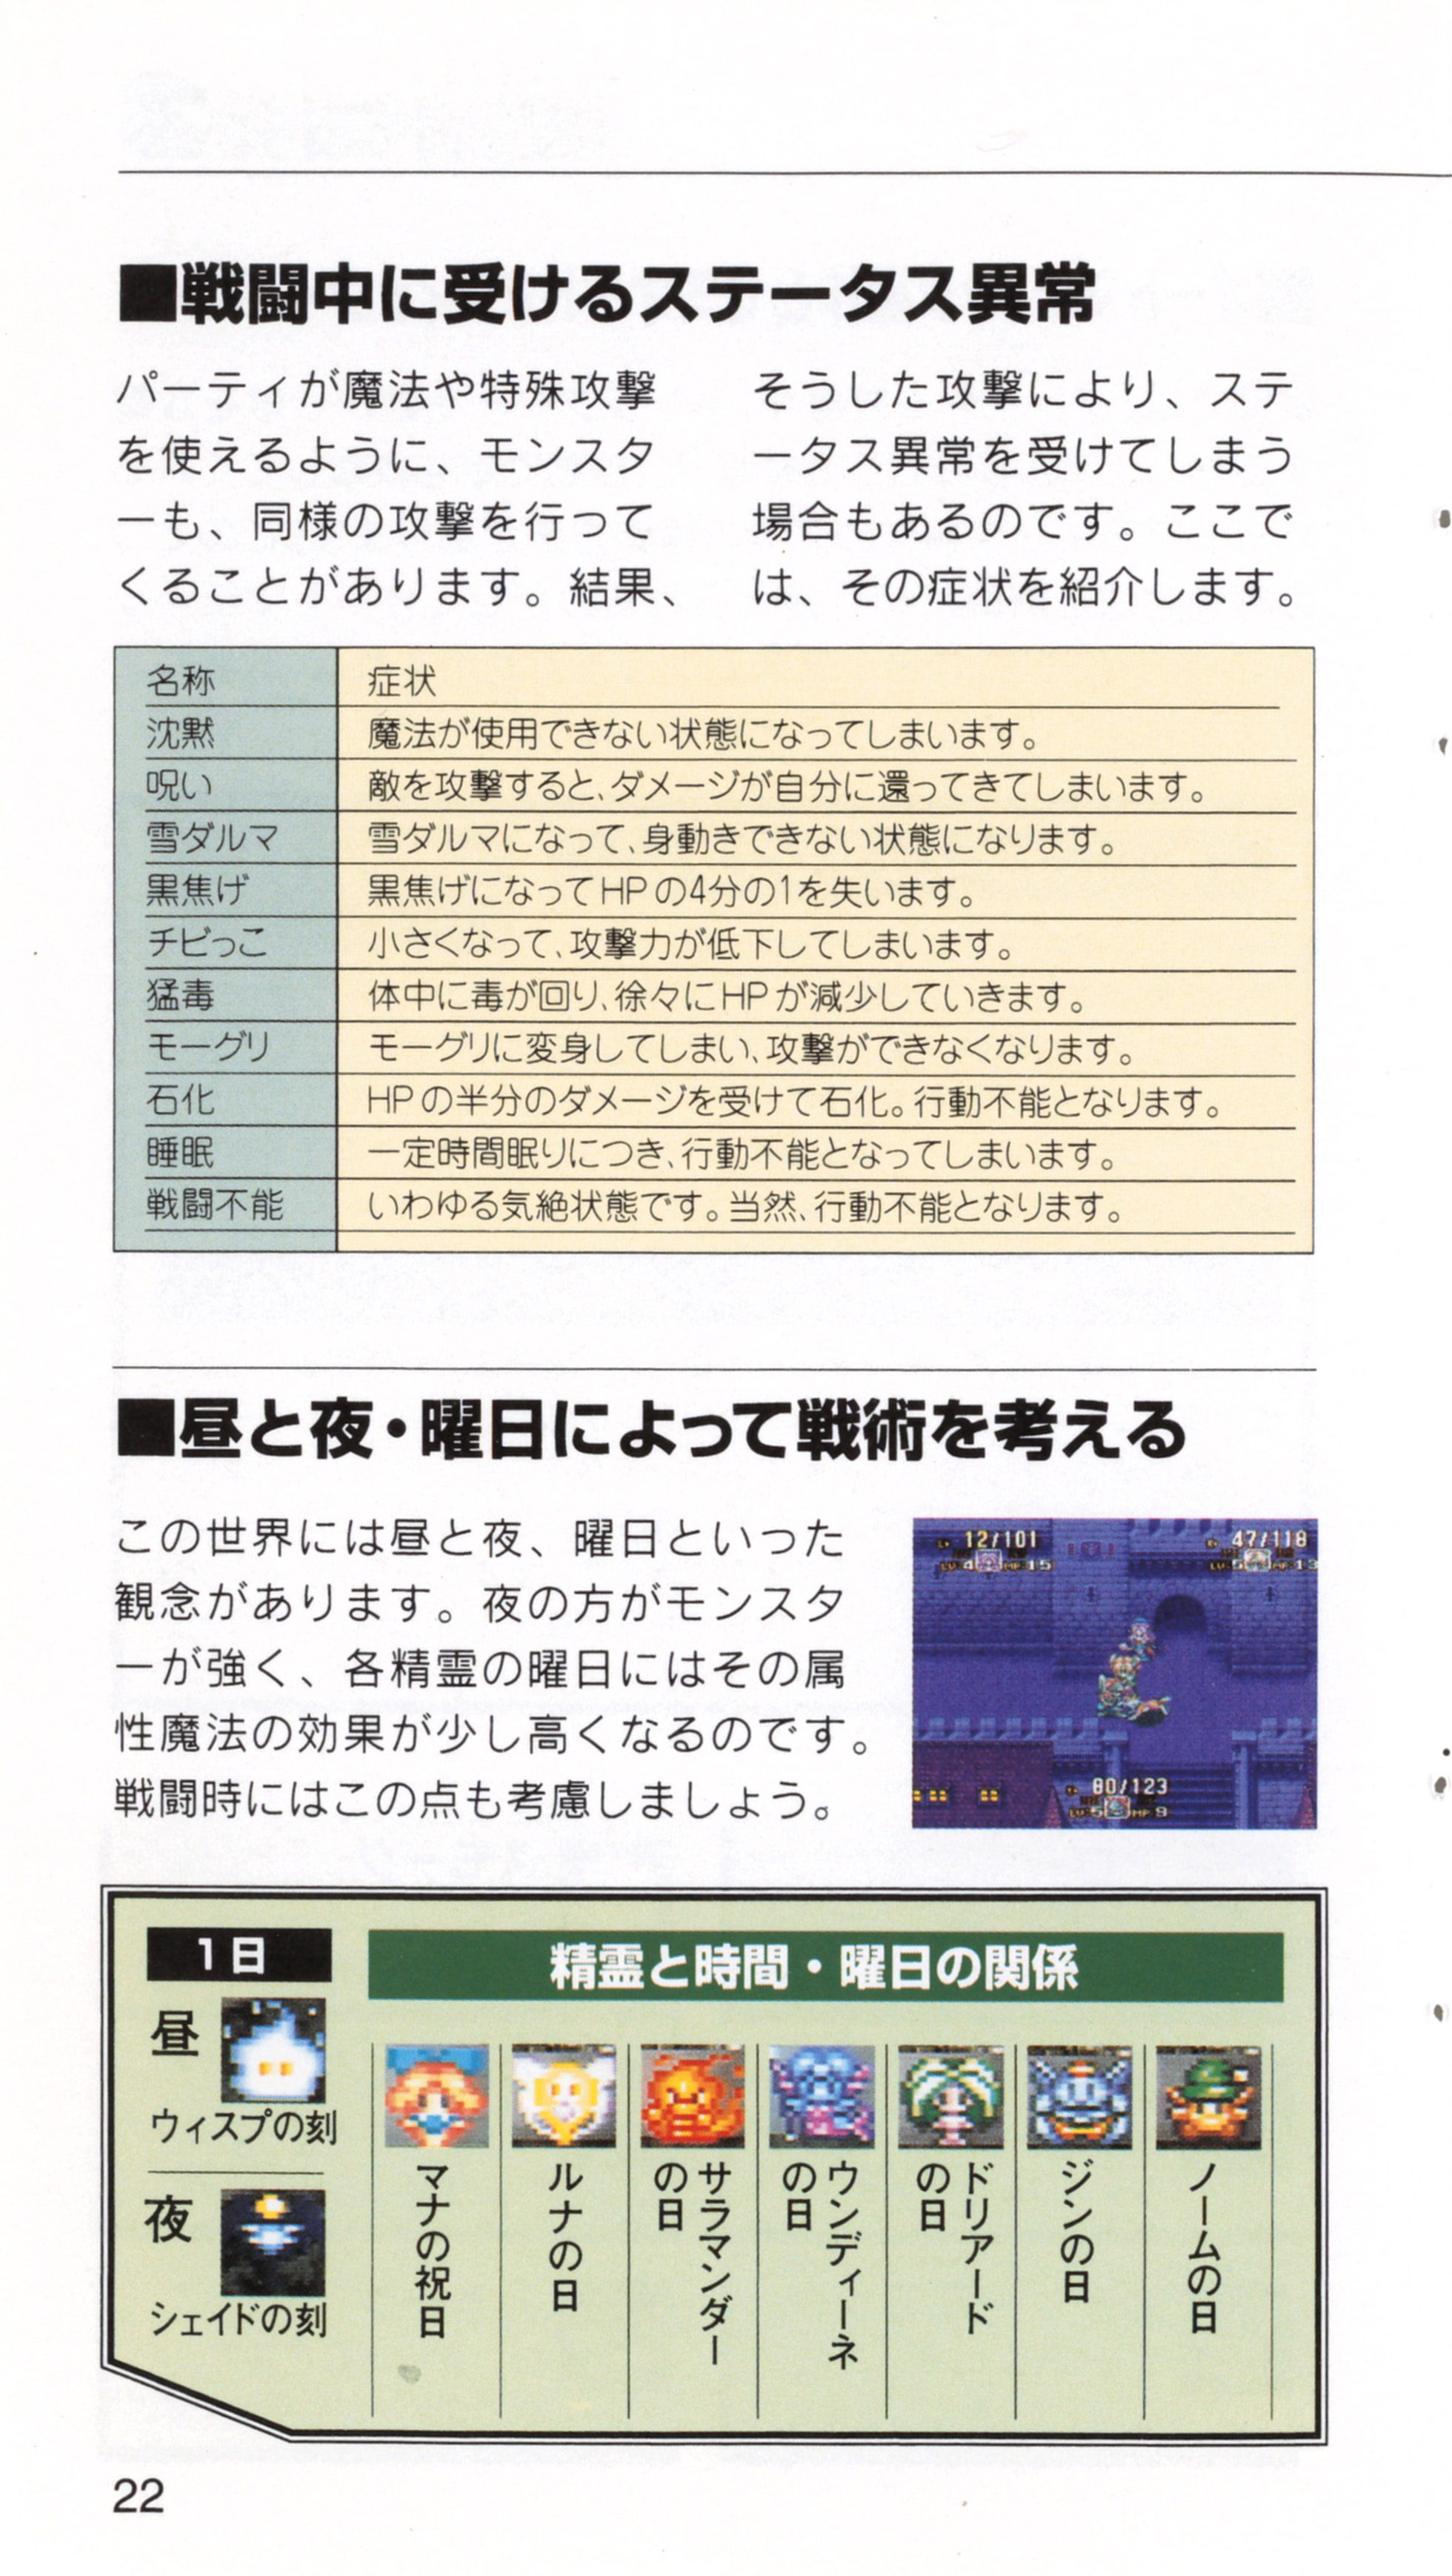 Seiken Densetsu 3 Shvc A3dj Super Famicom Box Cart Manual Scans 1600dpi Squaresoft Free Download Borrow And Streaming Internet Archive